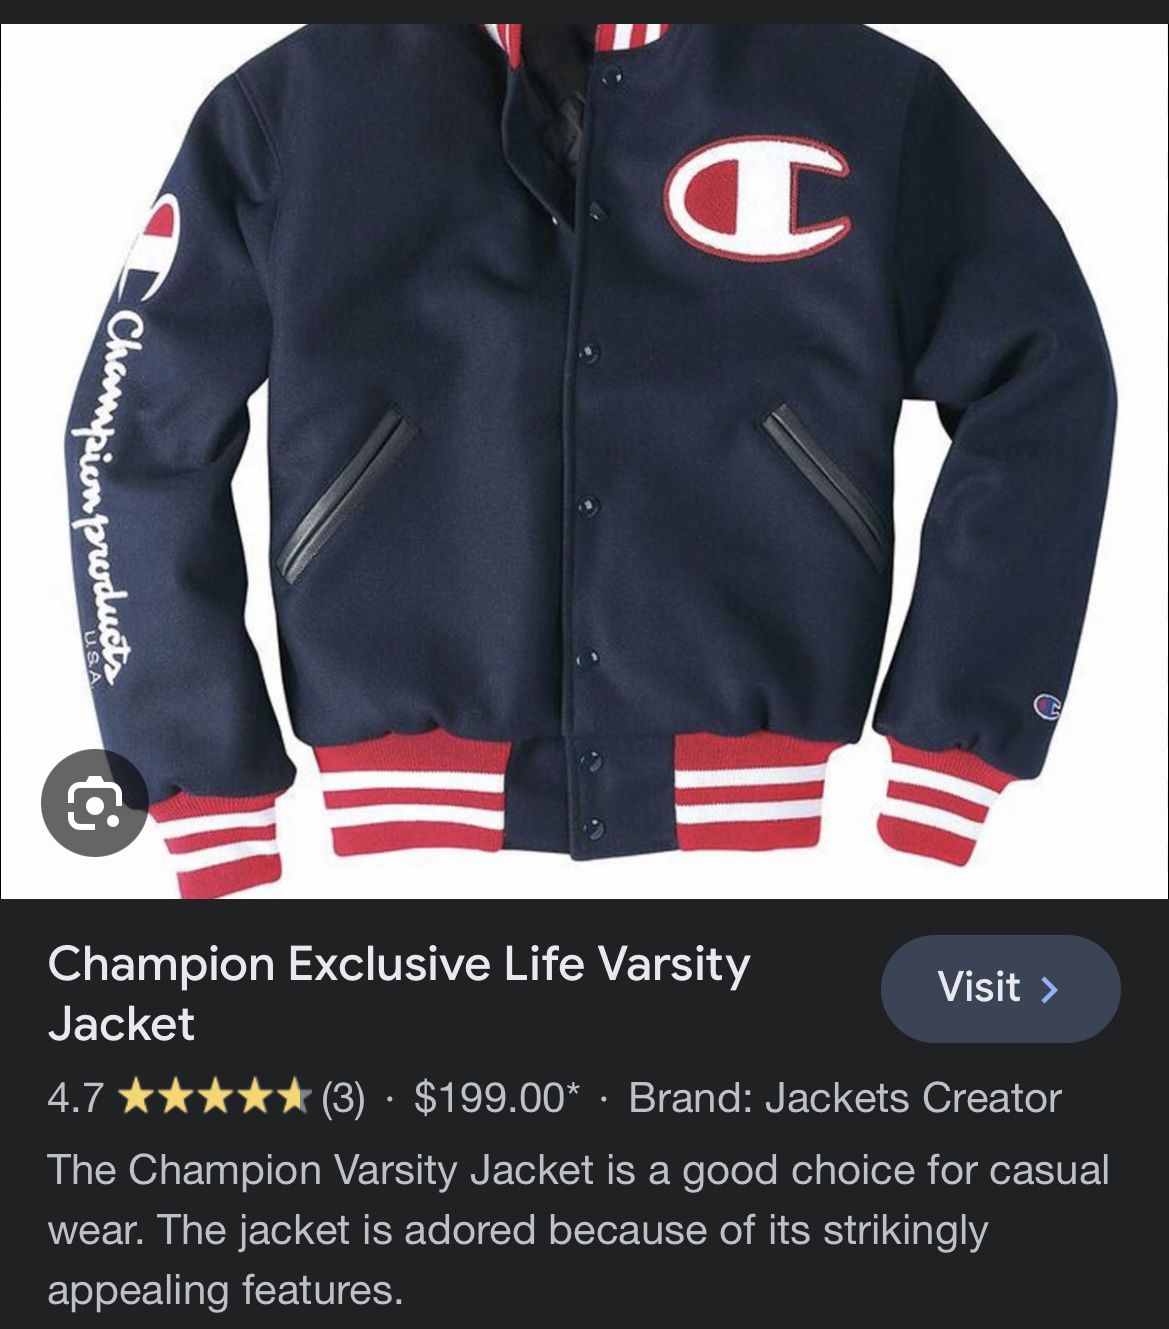 Champion Exclusive Life Varsity Jacket